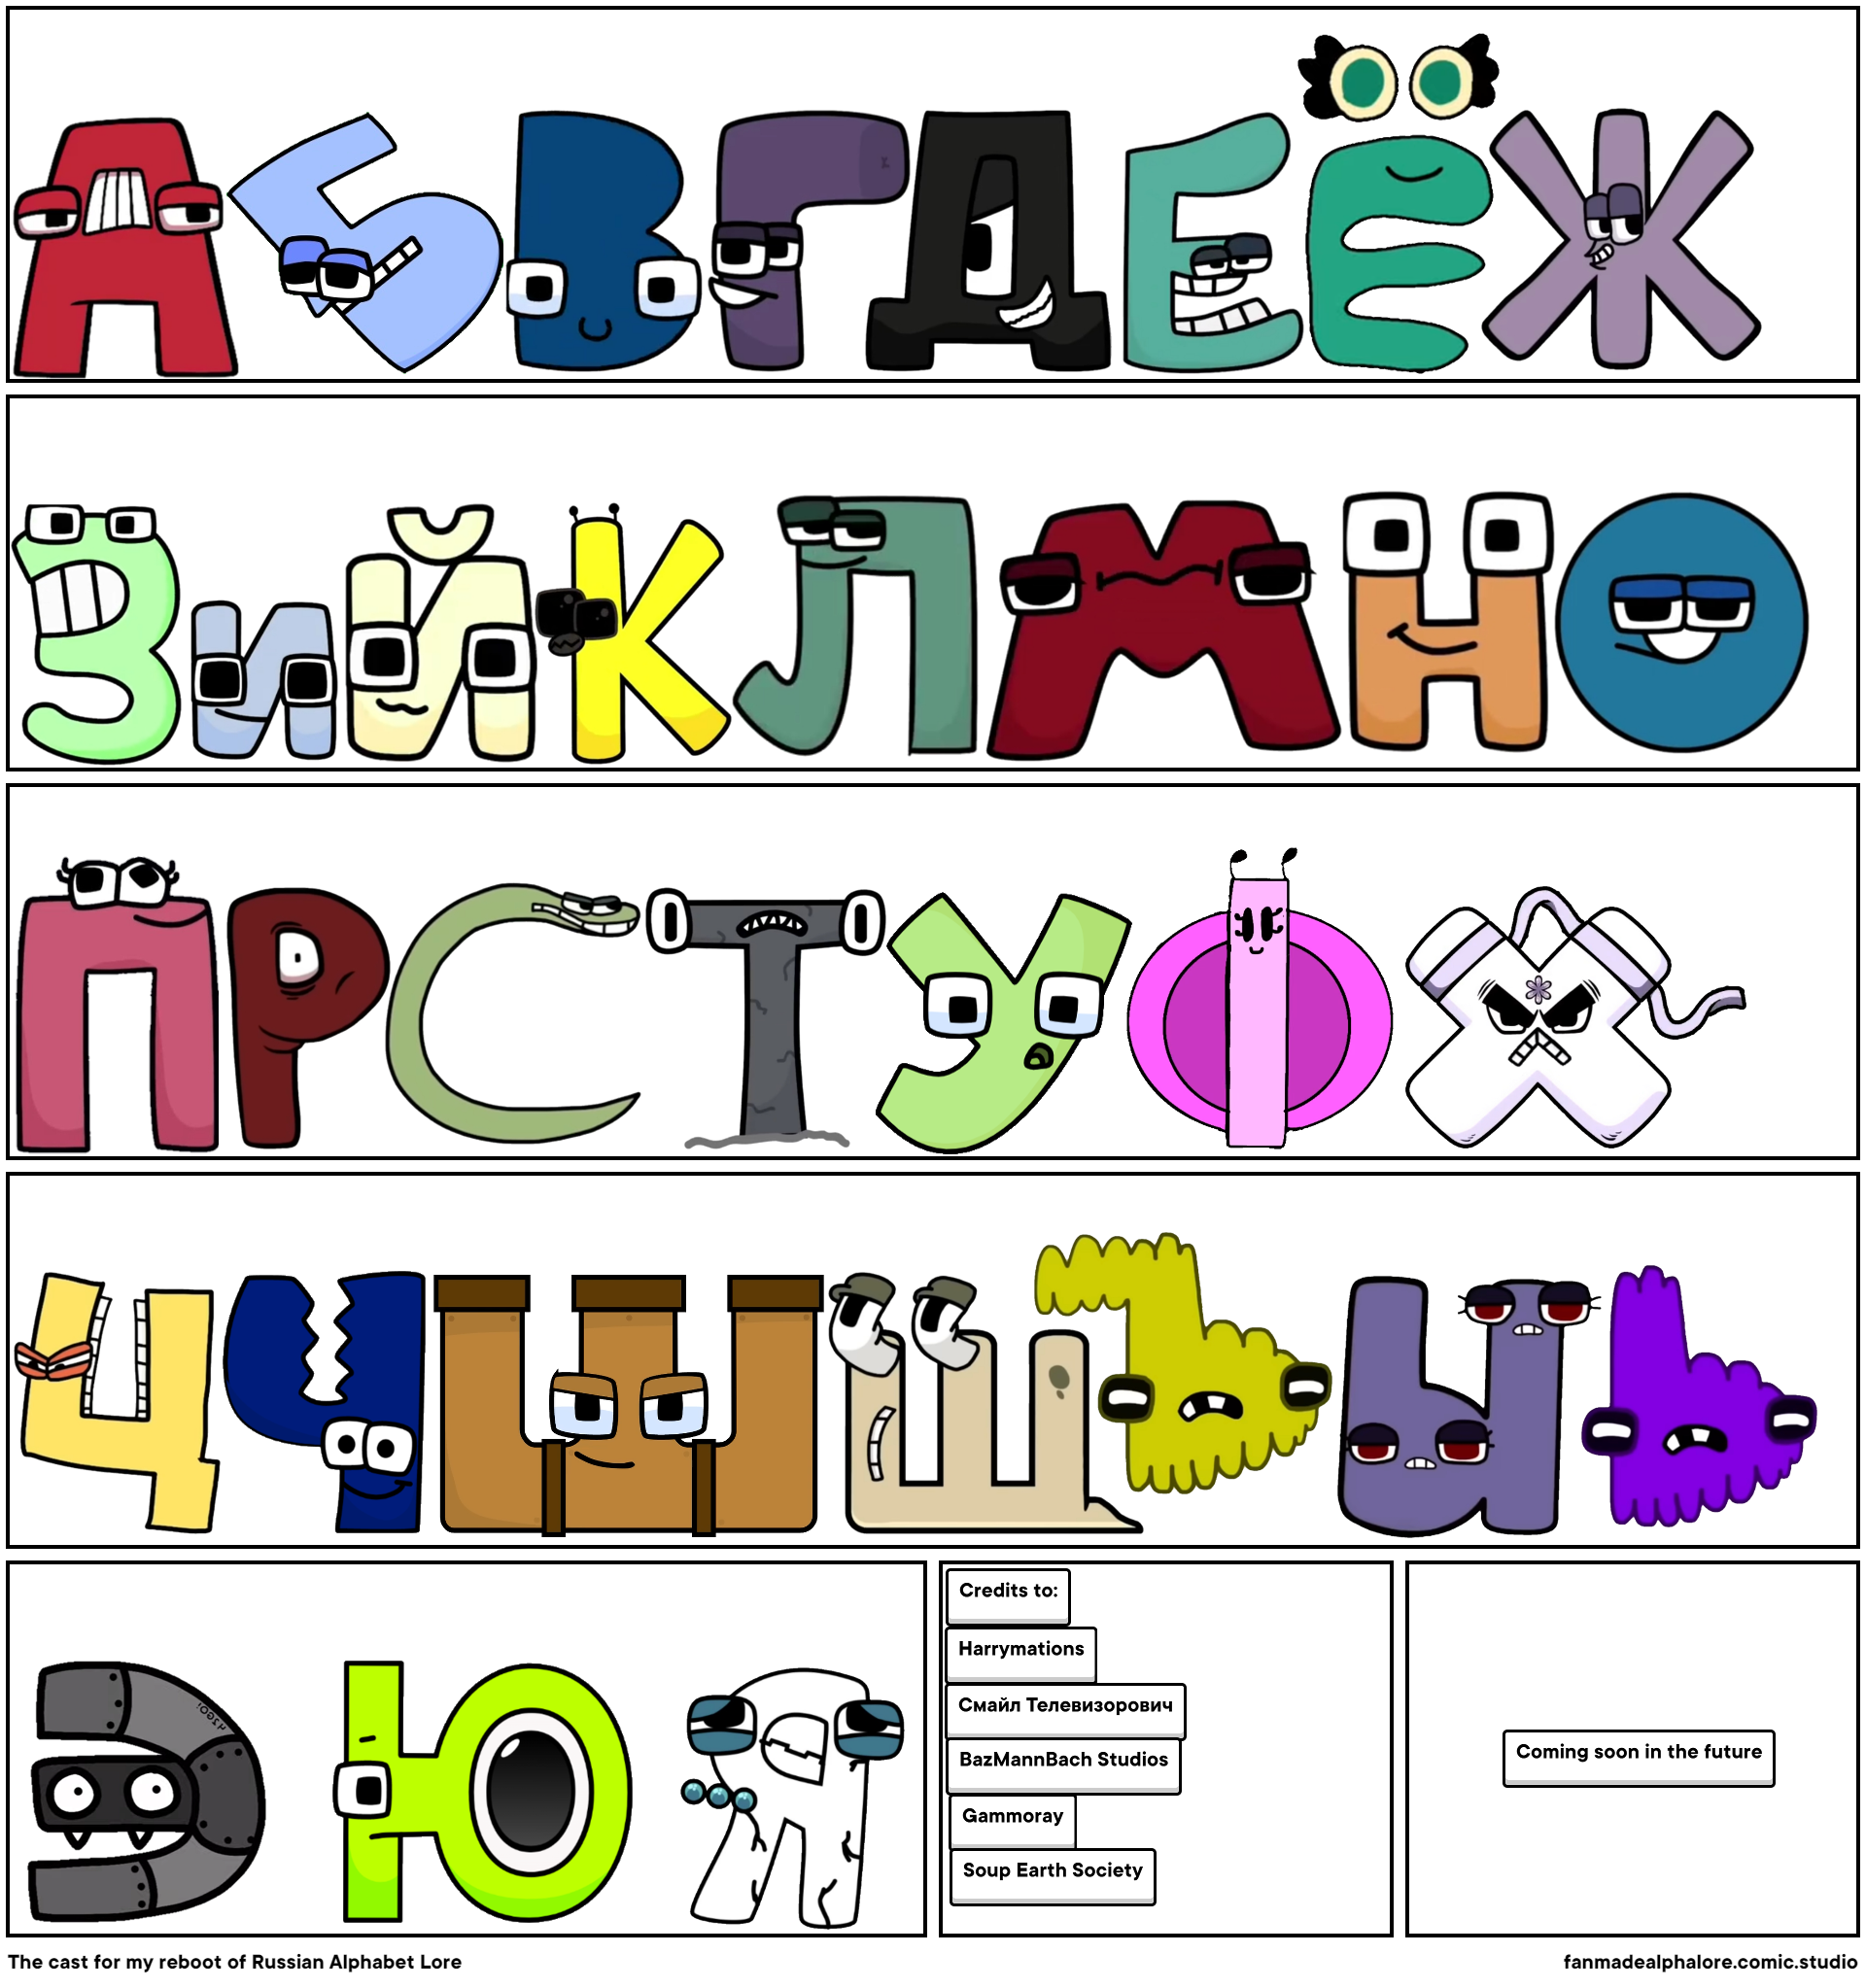 Full Cyrillic Alphabet Lore Ä-Б - Comic Studio